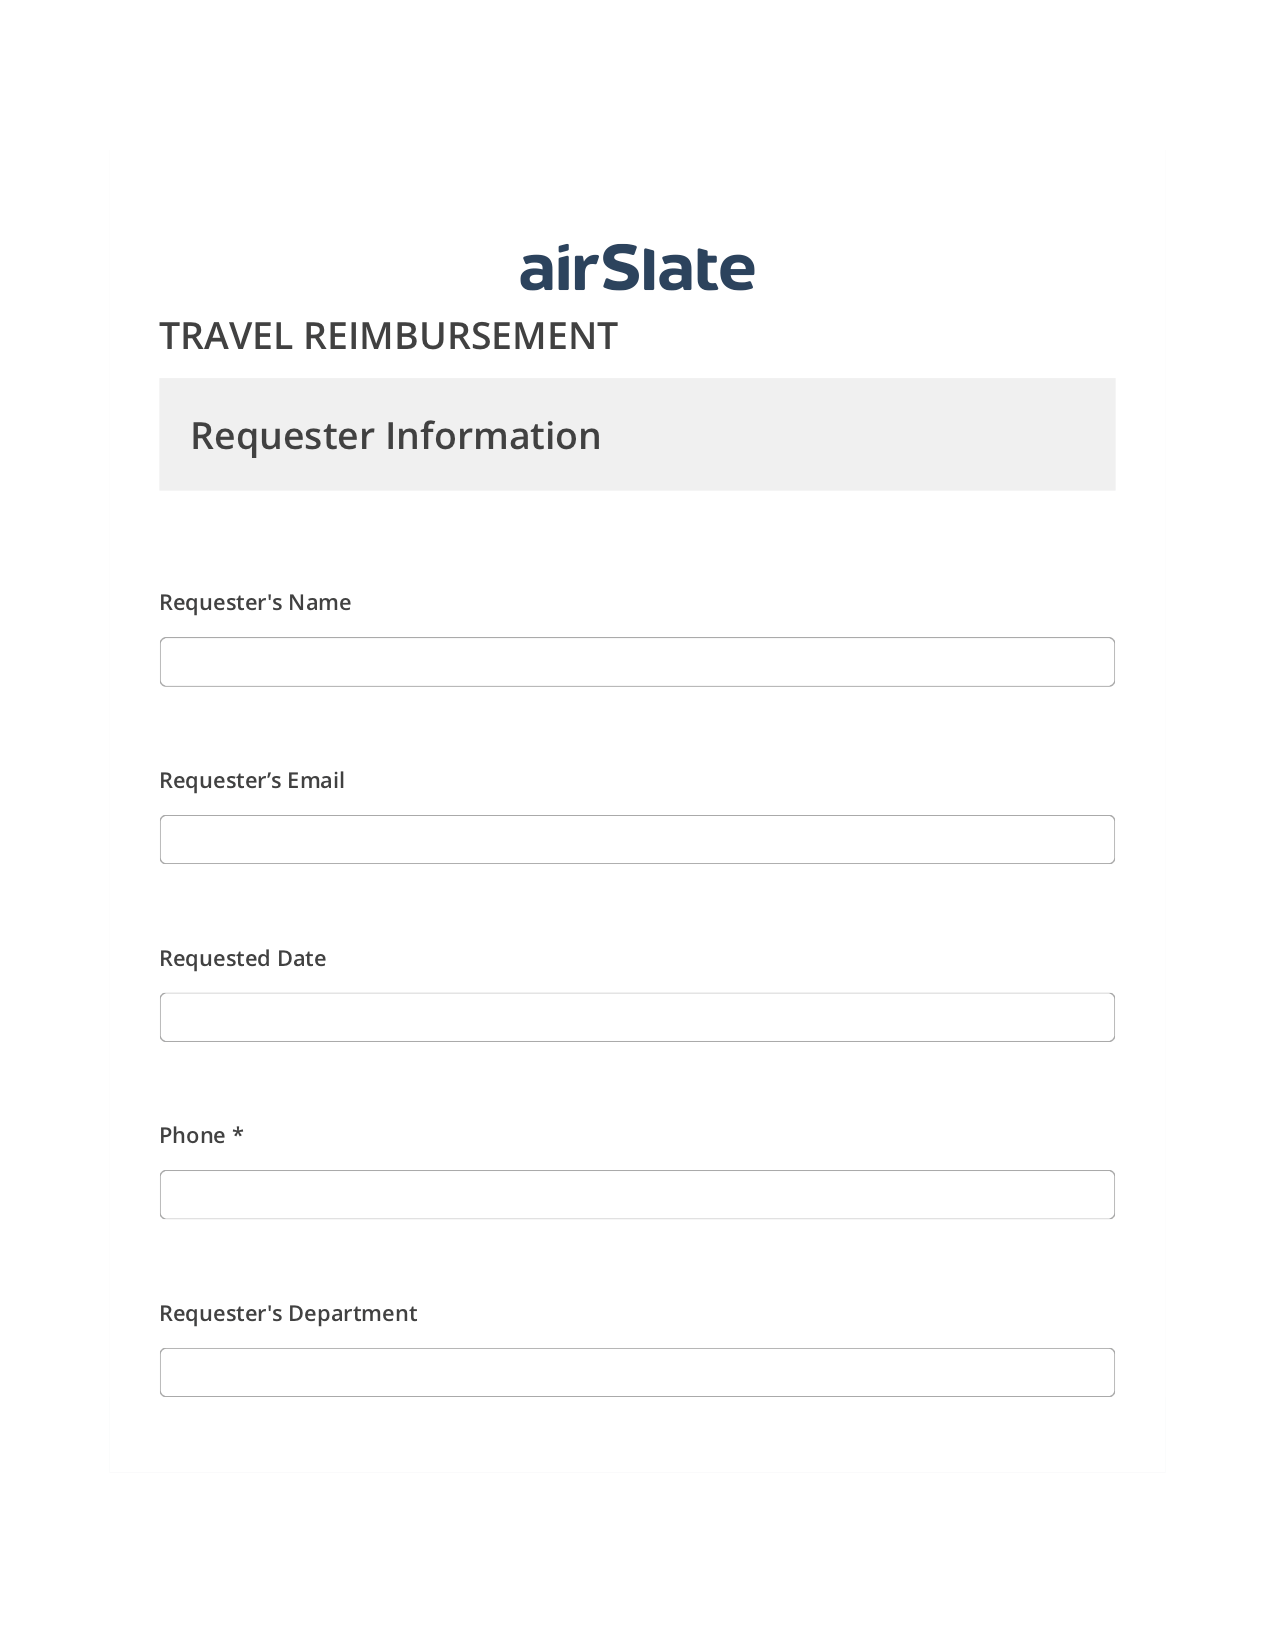 Travel Reimbursement Flow Pre-fill from Excel Spreadsheet Bot